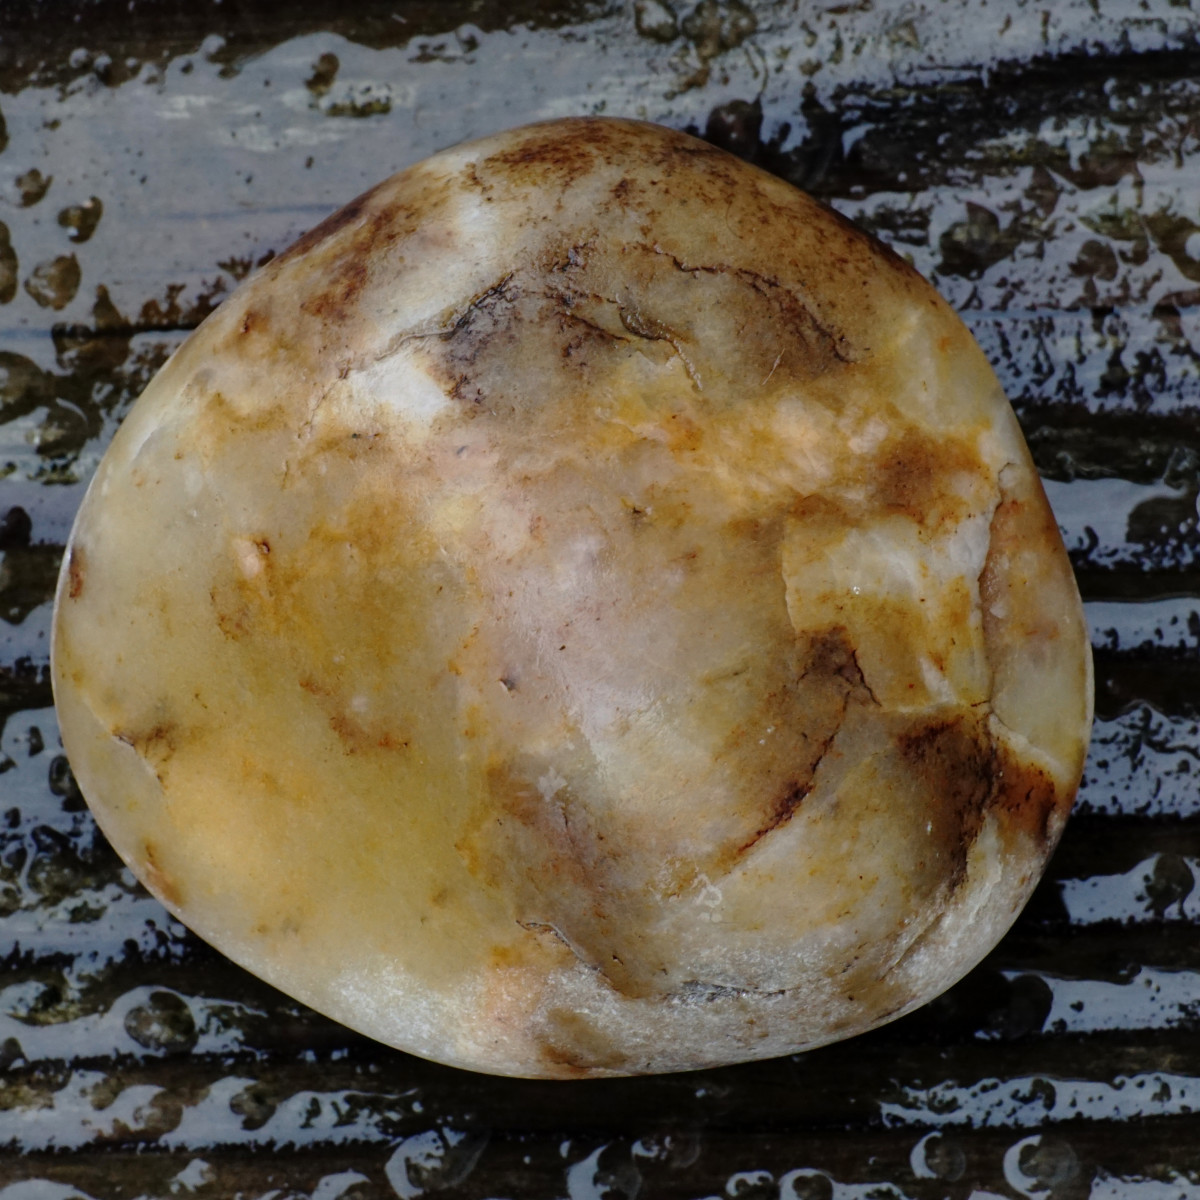 Chalcedony cobbler found along Lake Michigan beaches